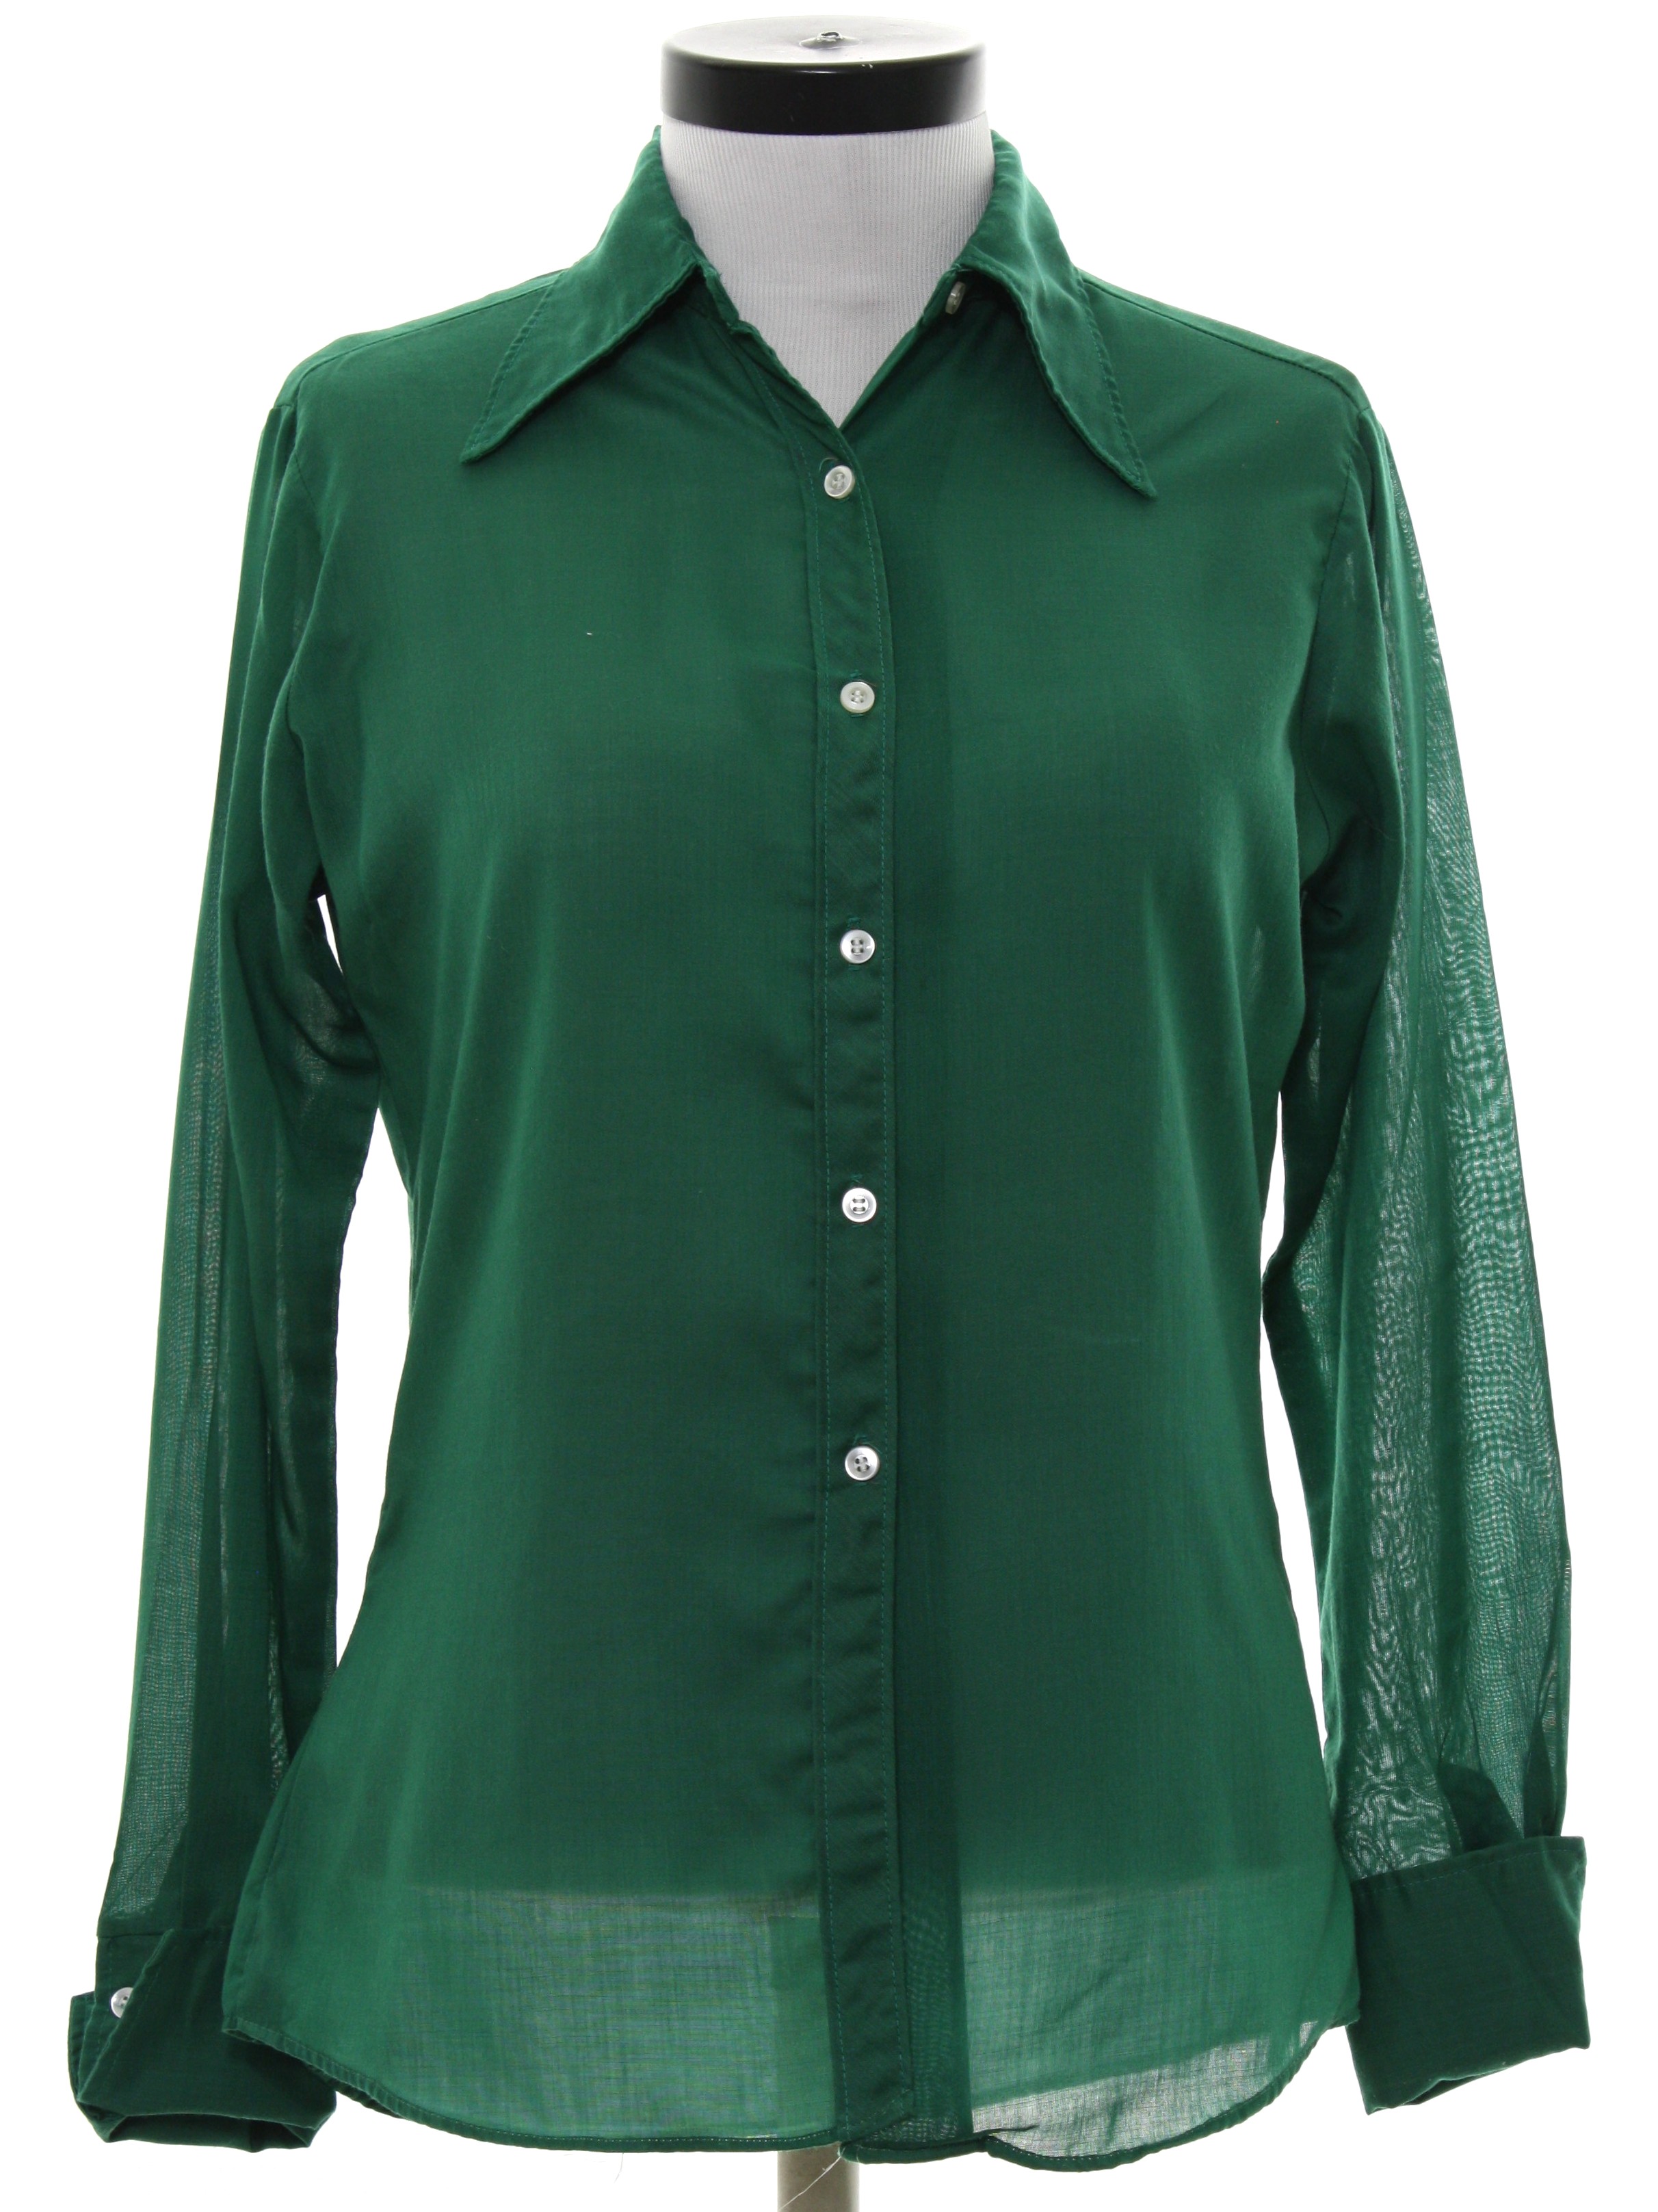 Retro 70s Shirt (Permanent Press) : 70s -Permanent Press- Womens pine ...